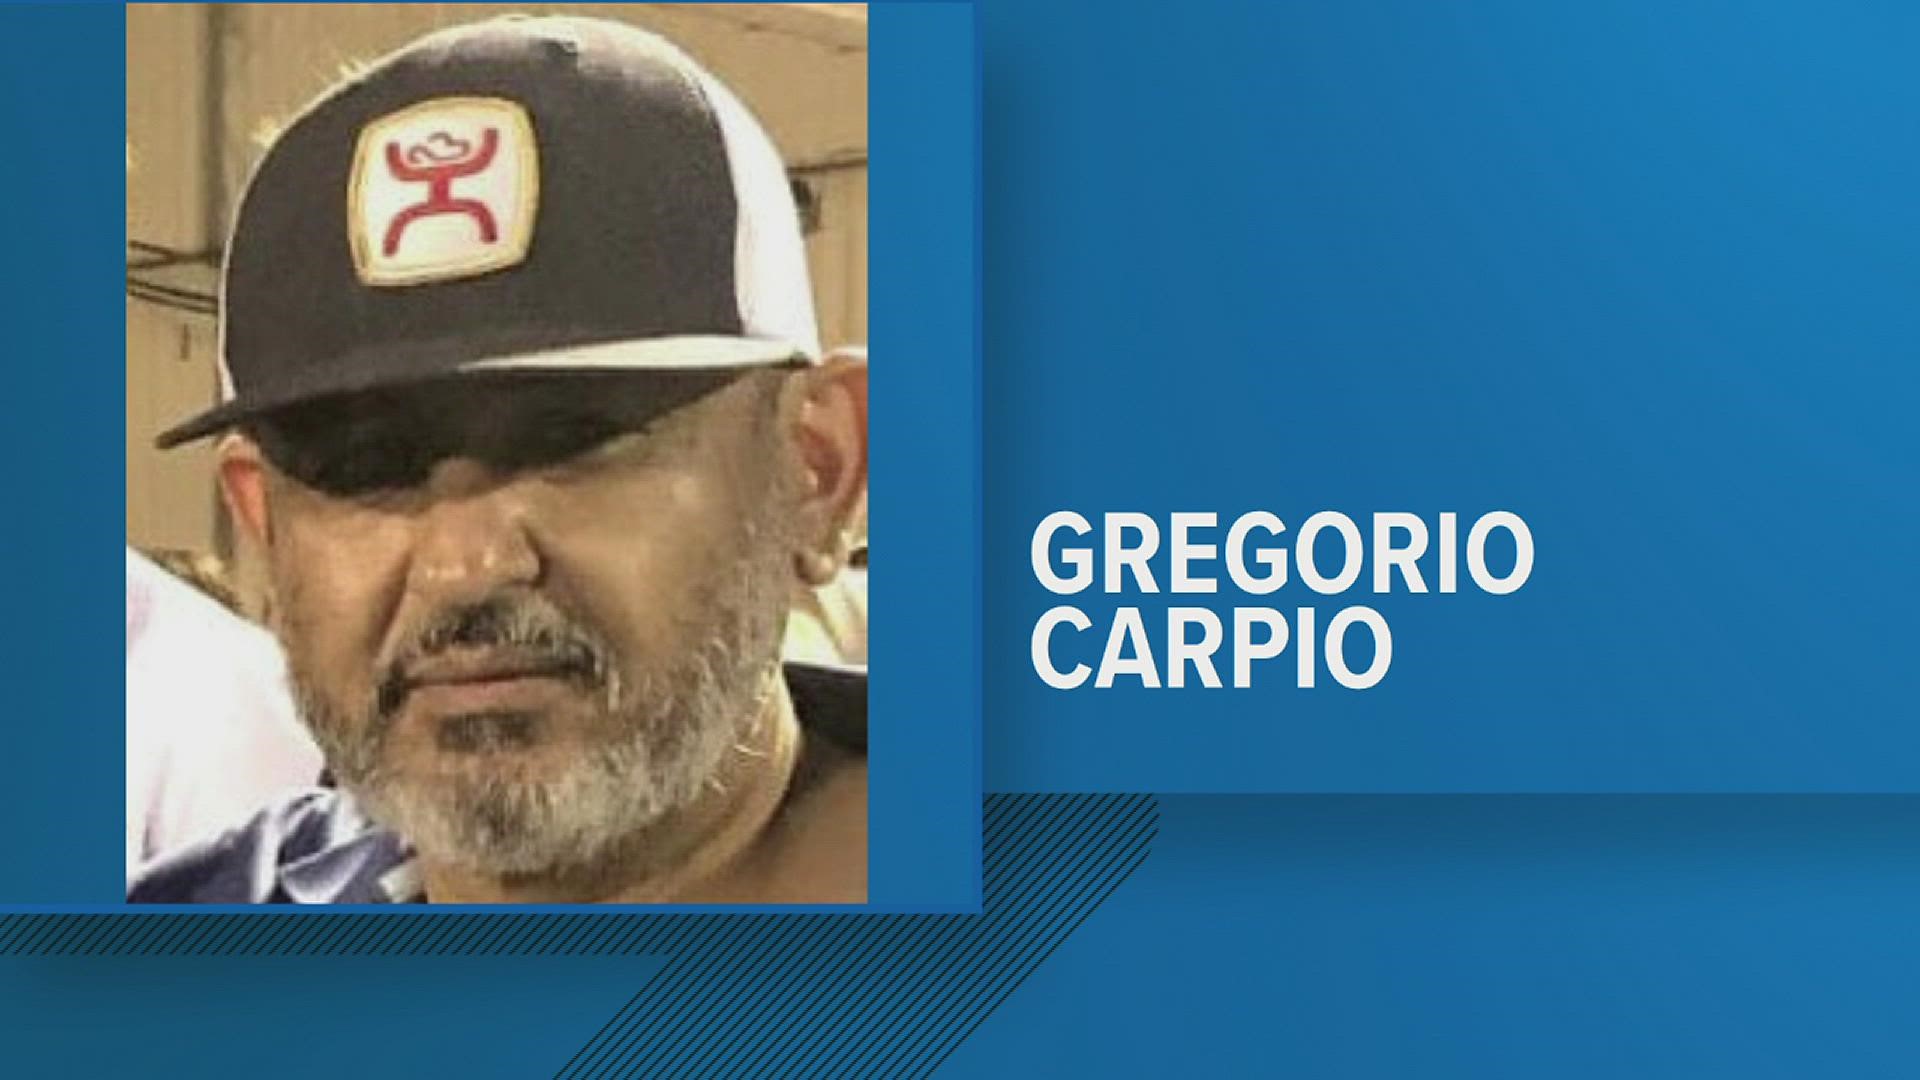 Gregorio Carpio, 50 of Rye, remains at large.